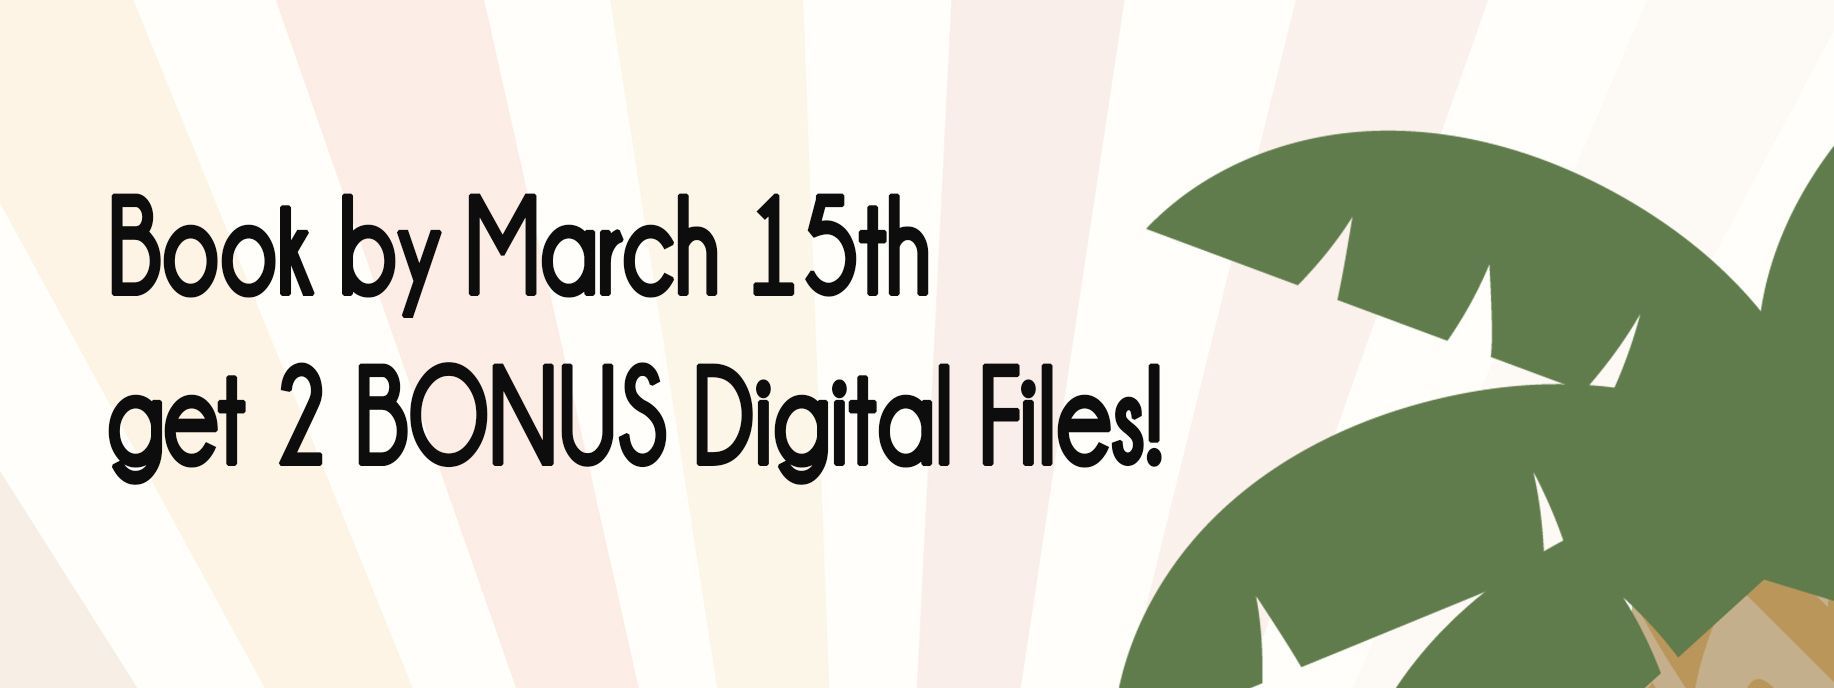 Book a Viva Shoot by March 15th get 2 BONUS digital files!